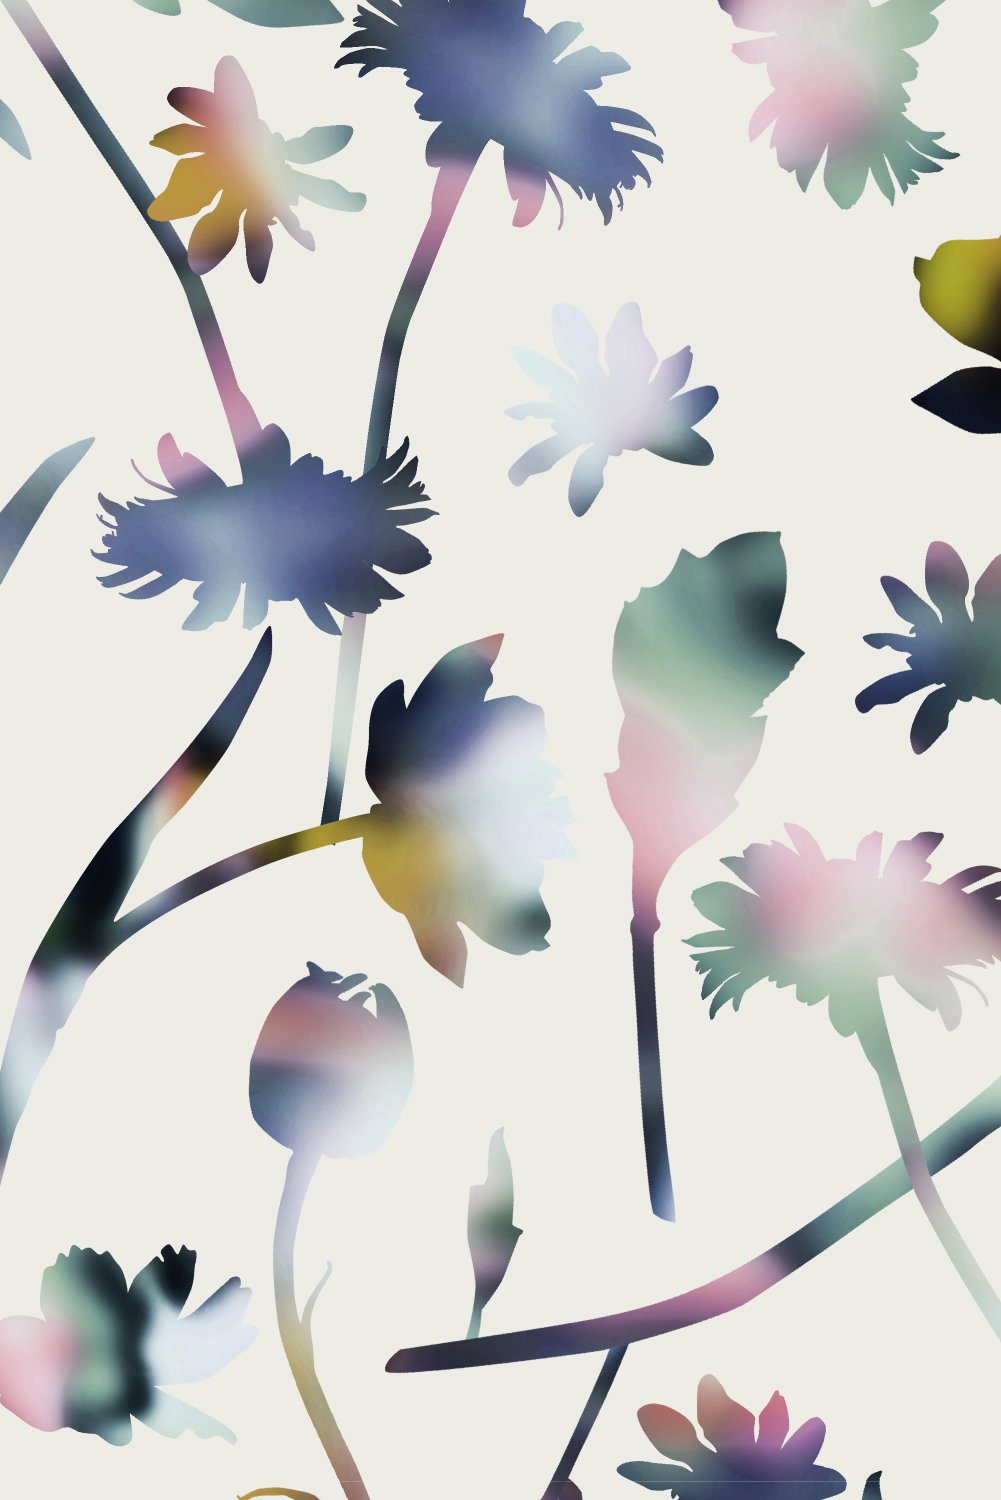 blurry-flowers-3.jpg